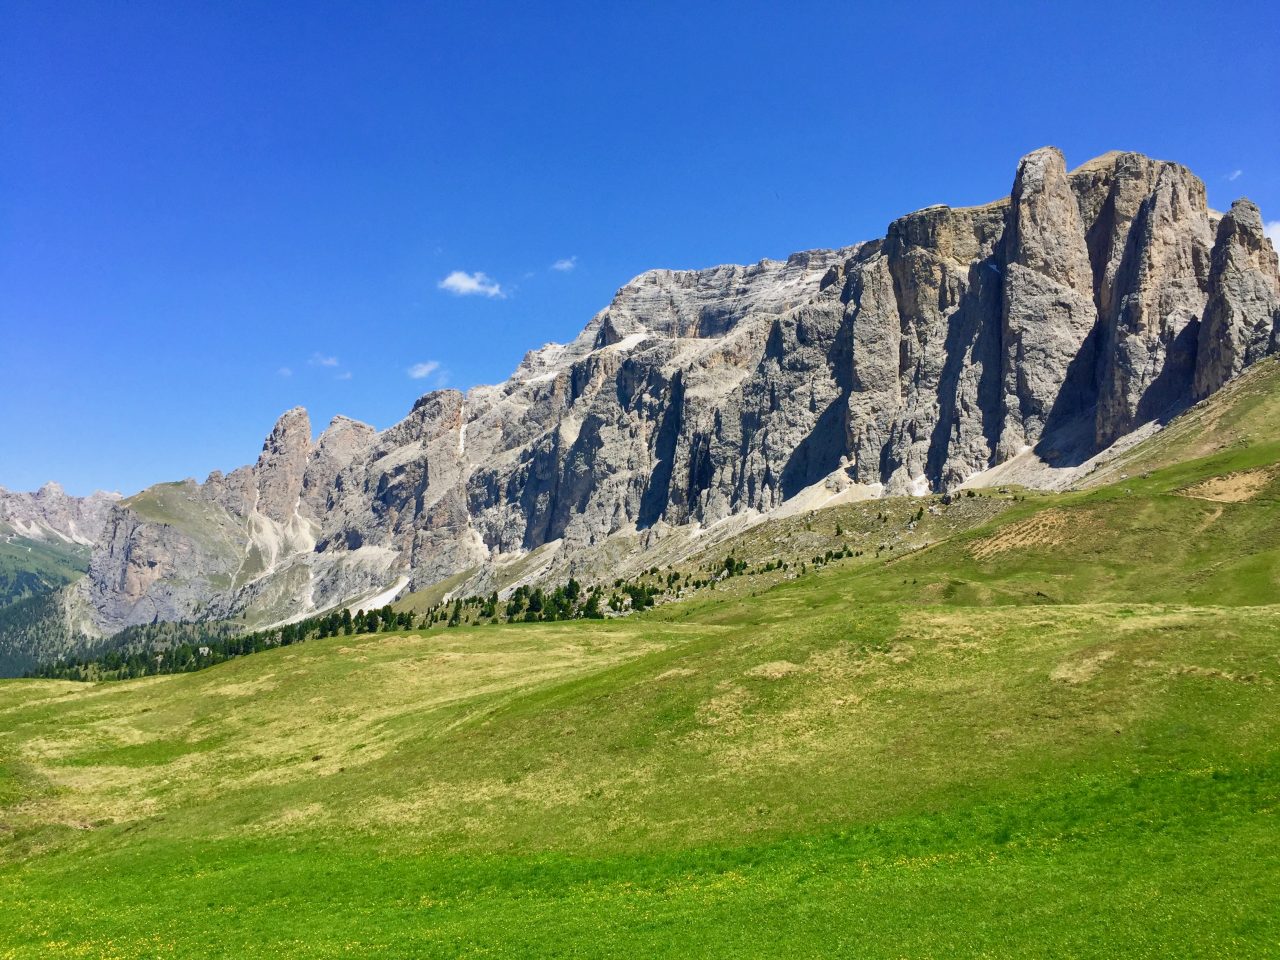 Abfahrt, Passo Sella, Dolomites, Italy